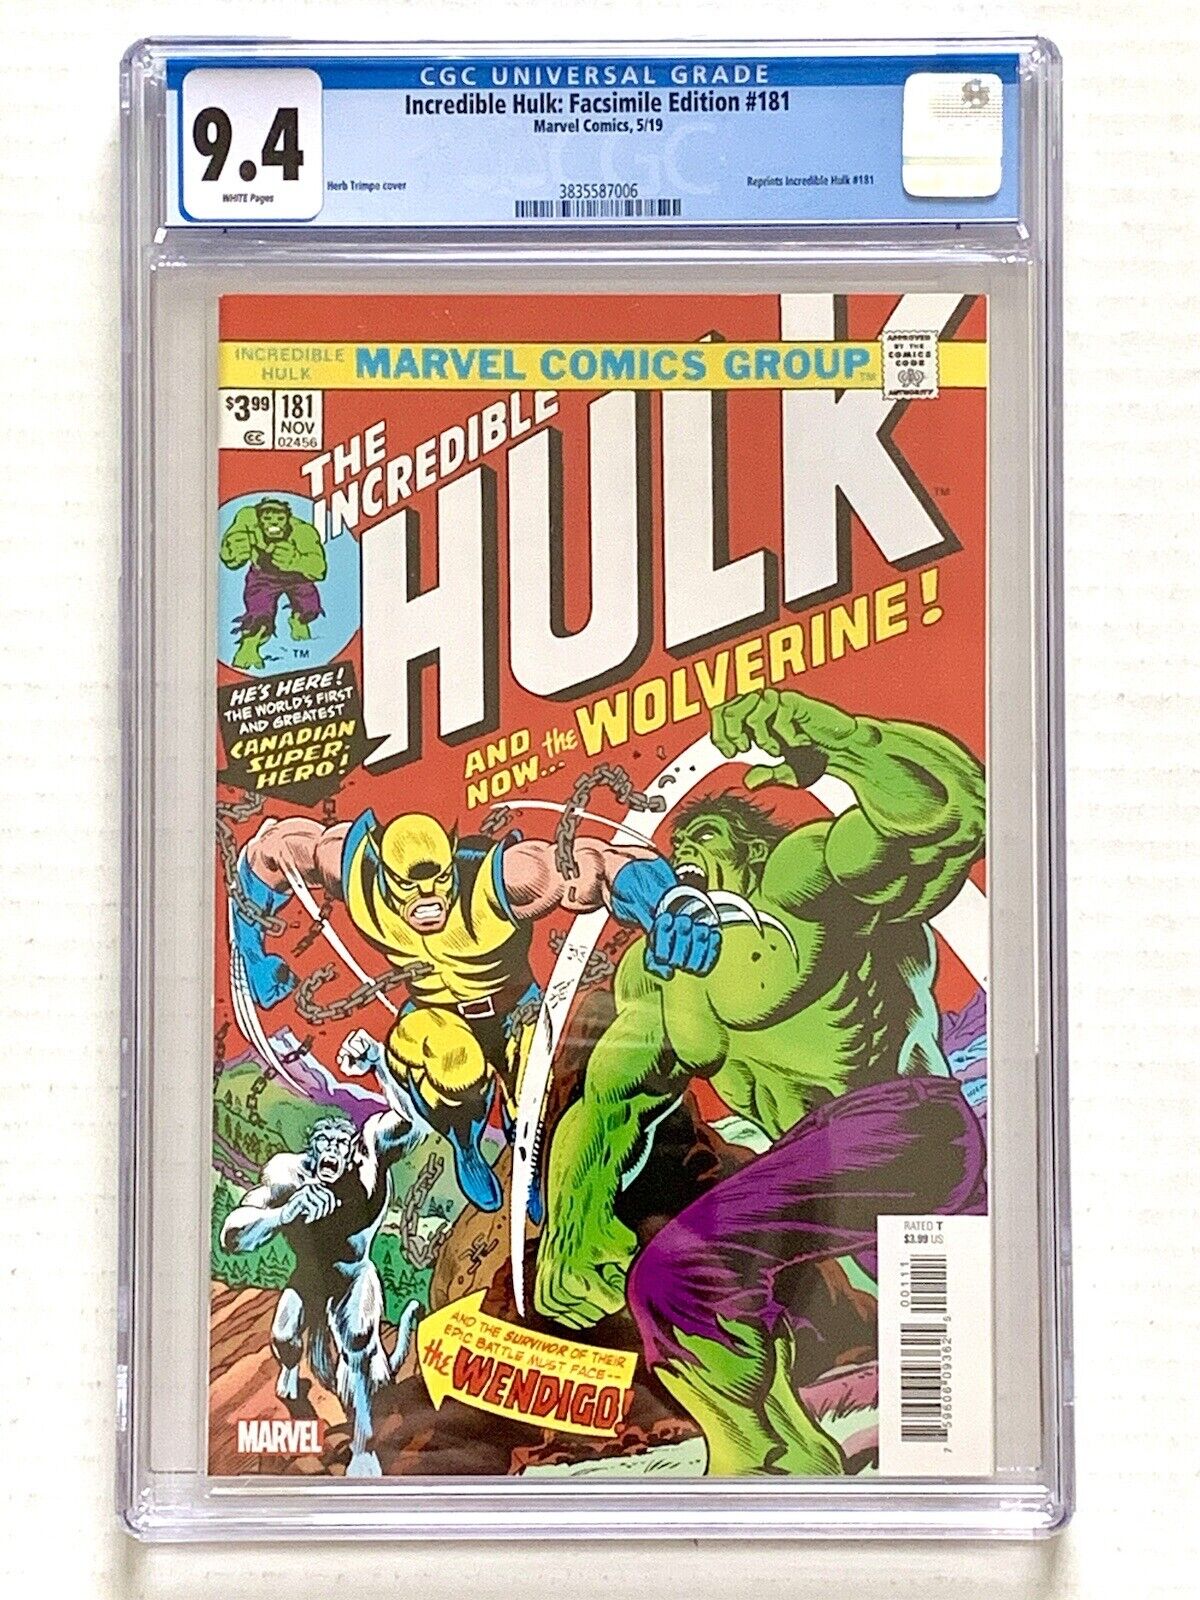 Incredible Hulk: FACSIMILE EDITION #181 (2019) CGC 9.4 - 1st Wolverine -VINTAGE